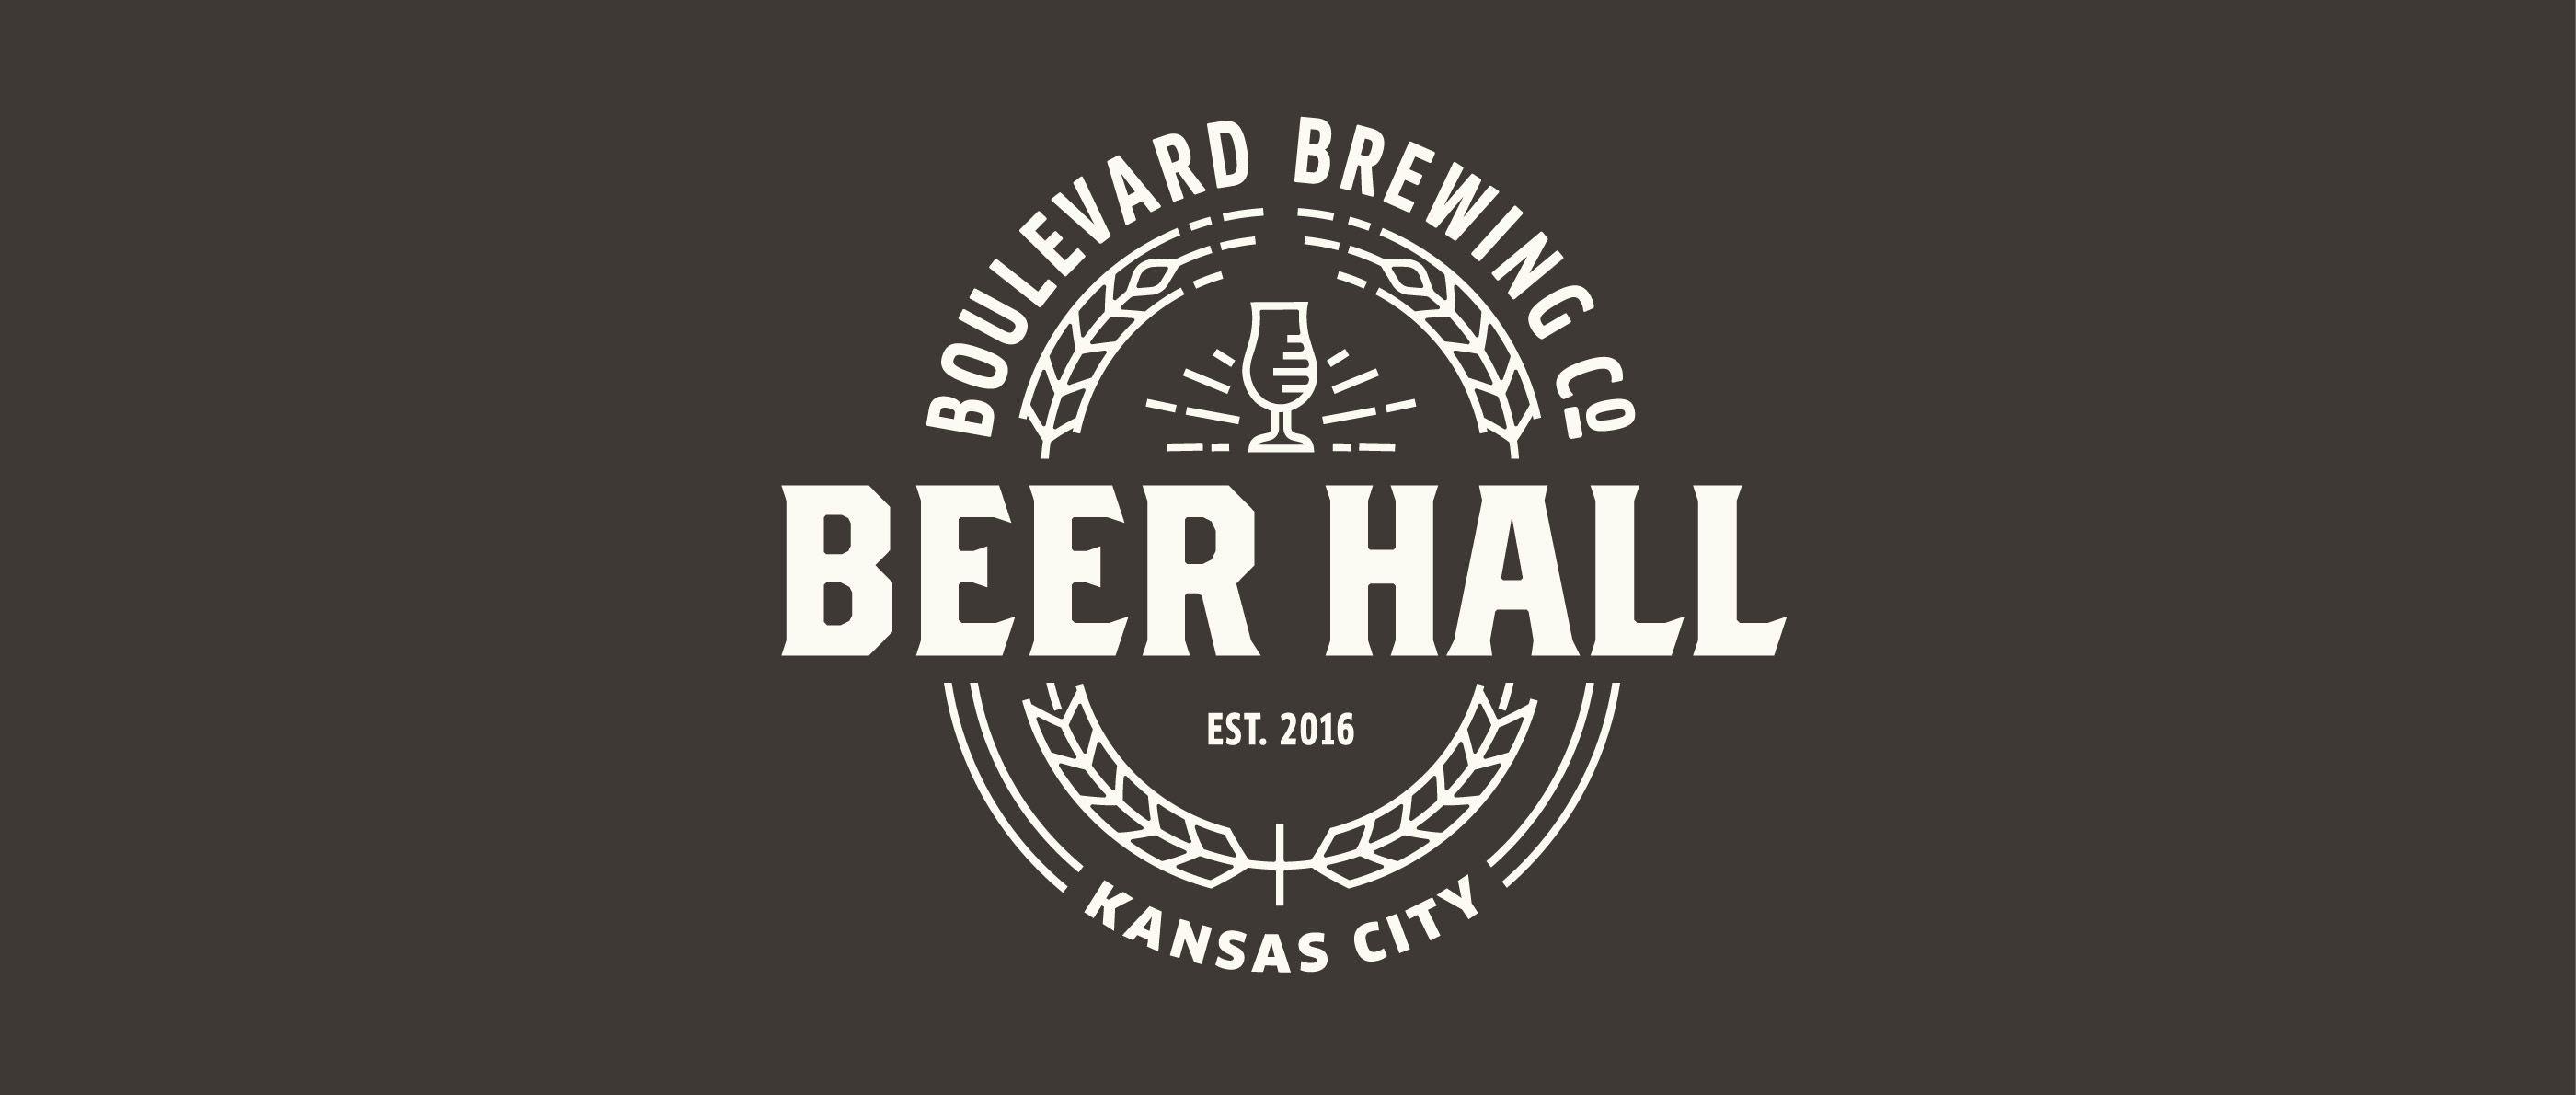 Blvd Beer Logo - Boulevard Beer Hall